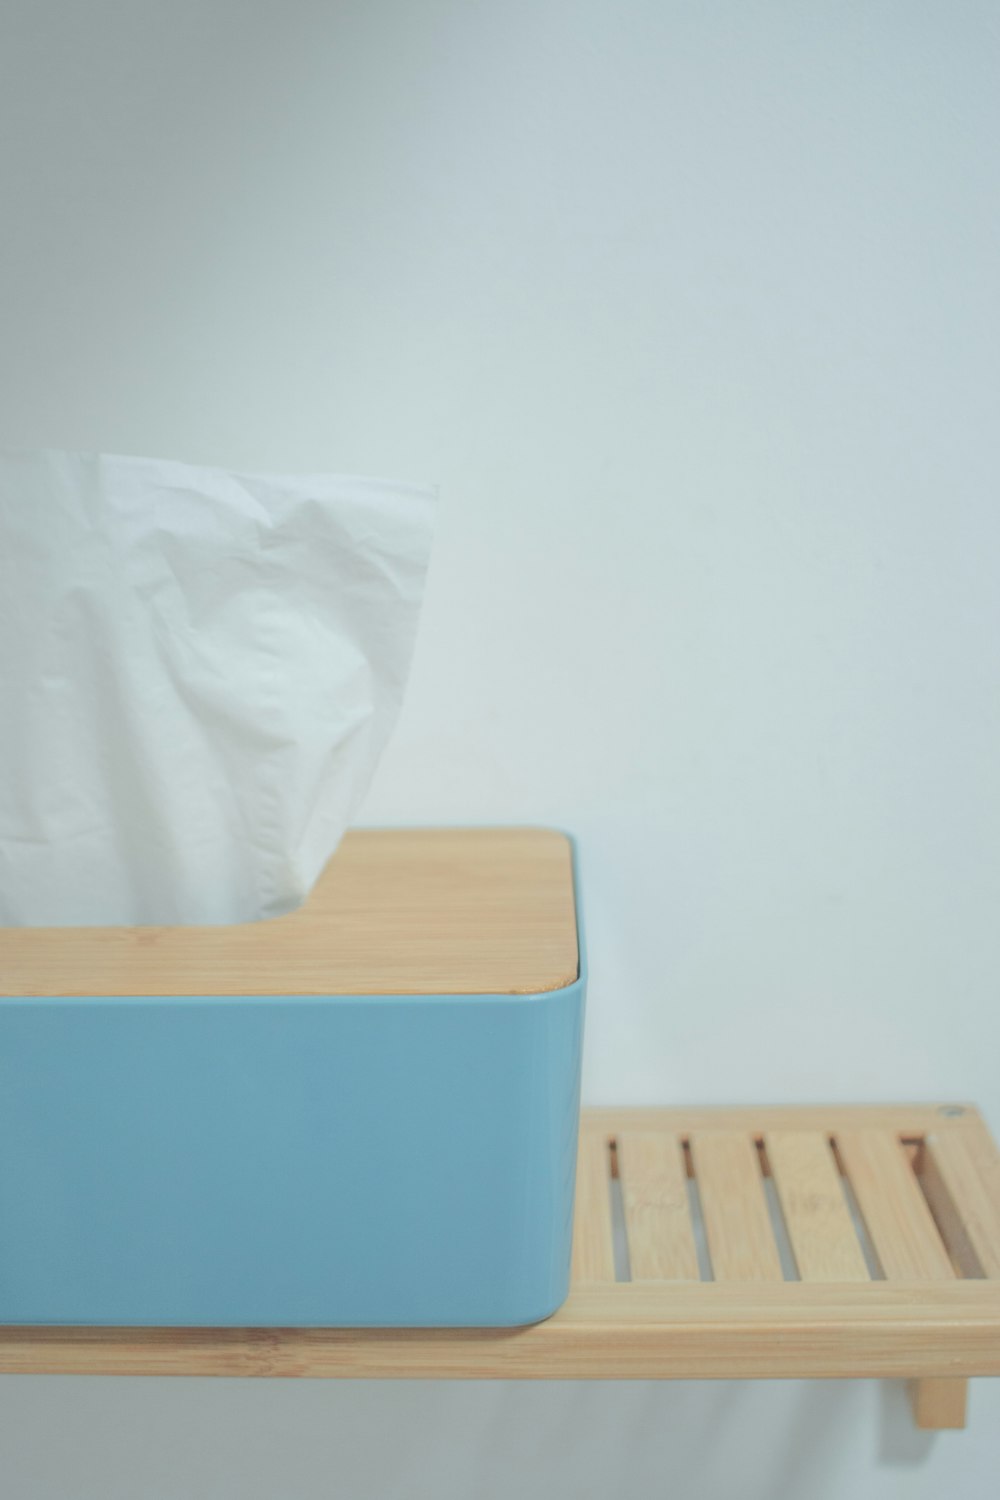 white tissue paper on blue plastic trash bin